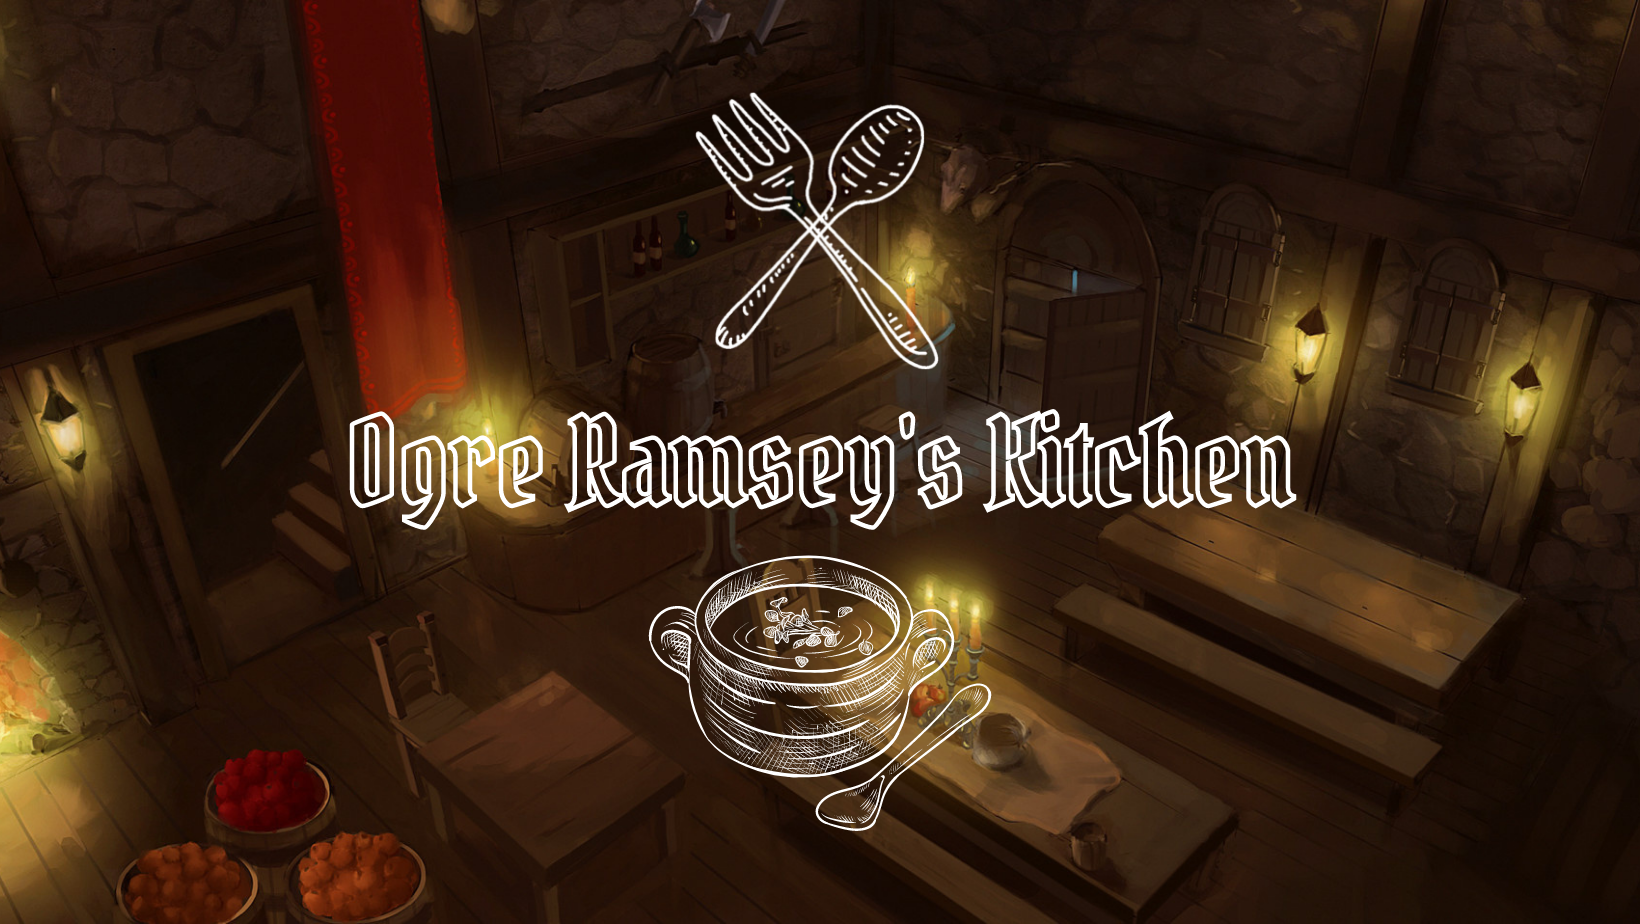 Ogre Ramsey's Kitchen (AR Game)